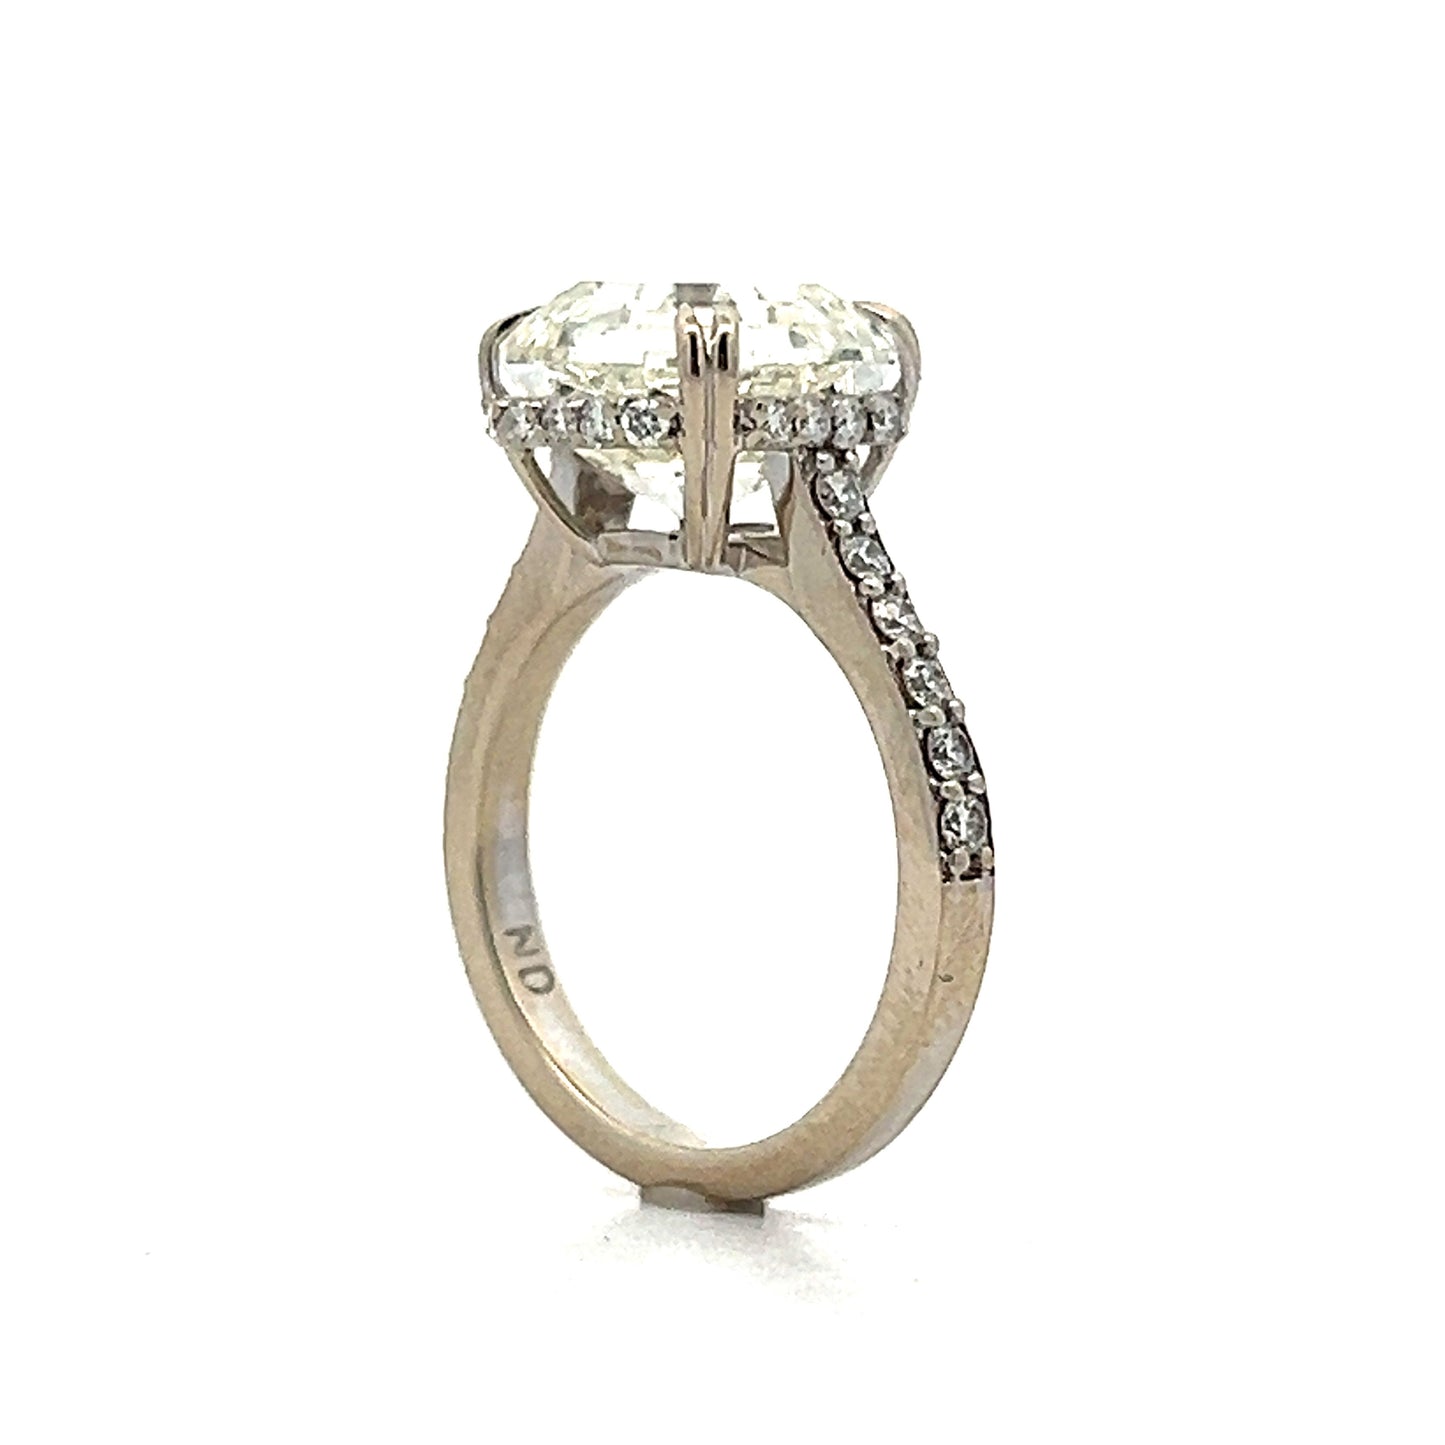 5.04 Asscher Cut Diamond Engagement Ring in White Gold